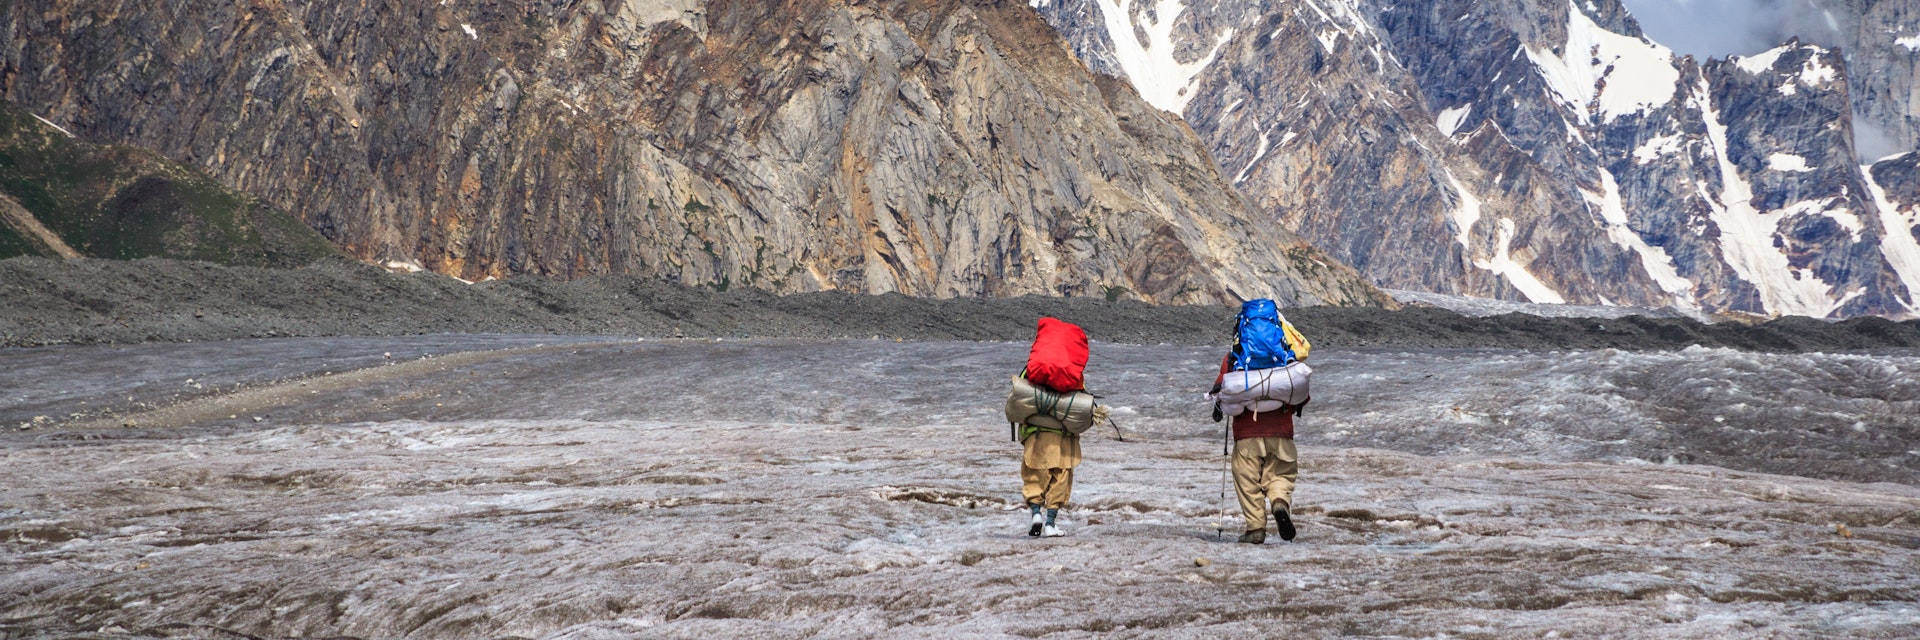 Two Balti porters walking on Biafo glacier, with Karakoram mountains in background, during Biafo Hispar Snow Lake trek between Baintha and Marphogoro, in Central Karakoram National Park.